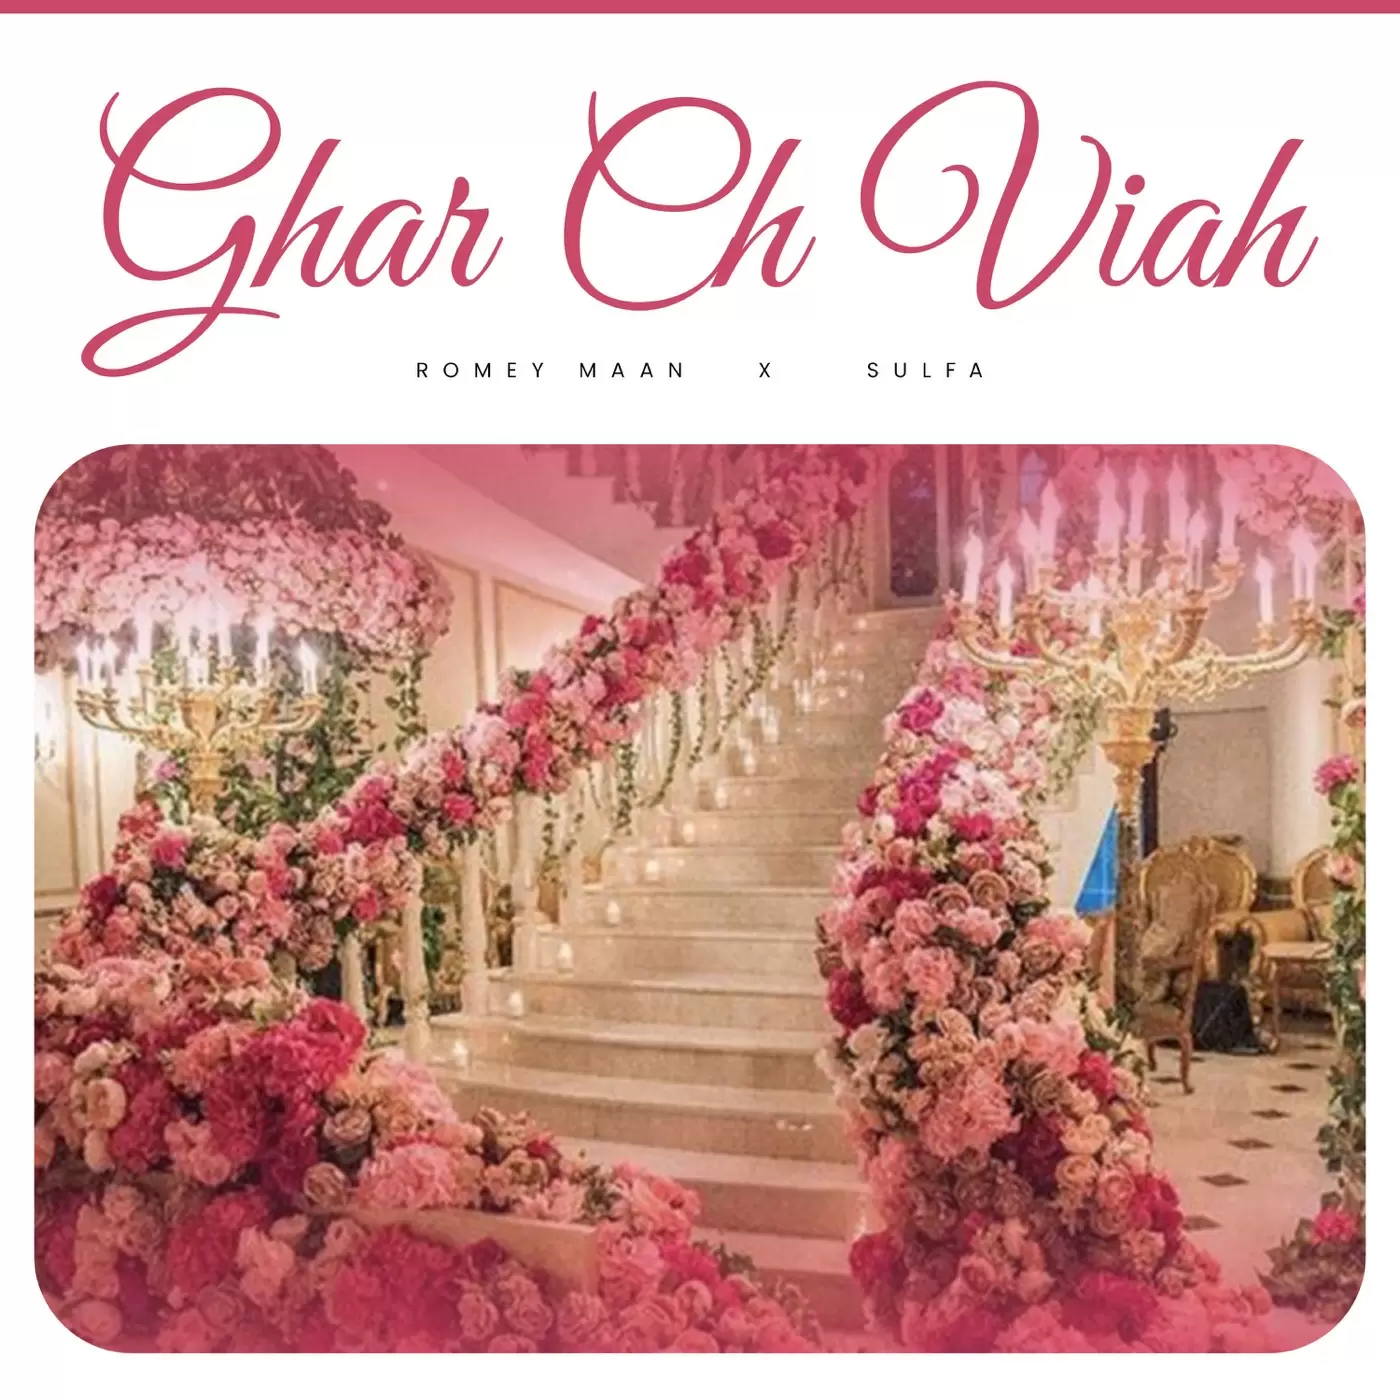 Ghar Ch Viah - Single Song by Romey Maan - Mr-Punjab